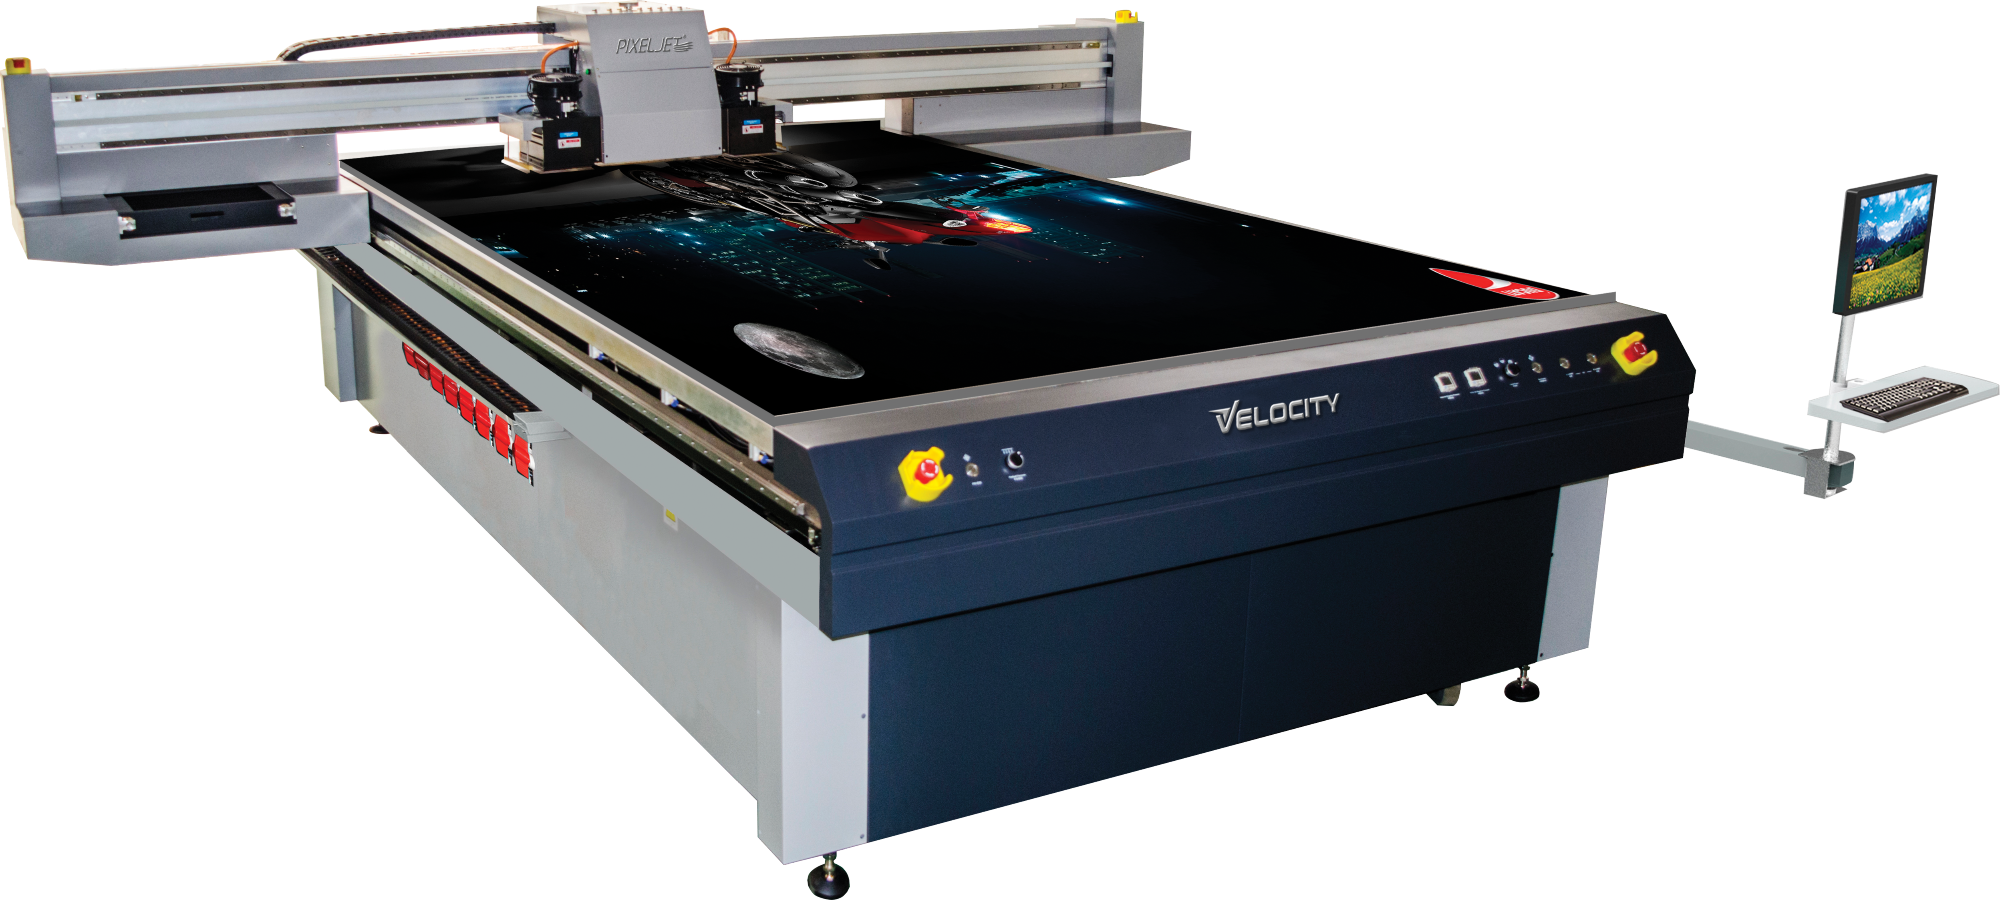 pixeljet-2132-high-volume-uv-flatbed-printer